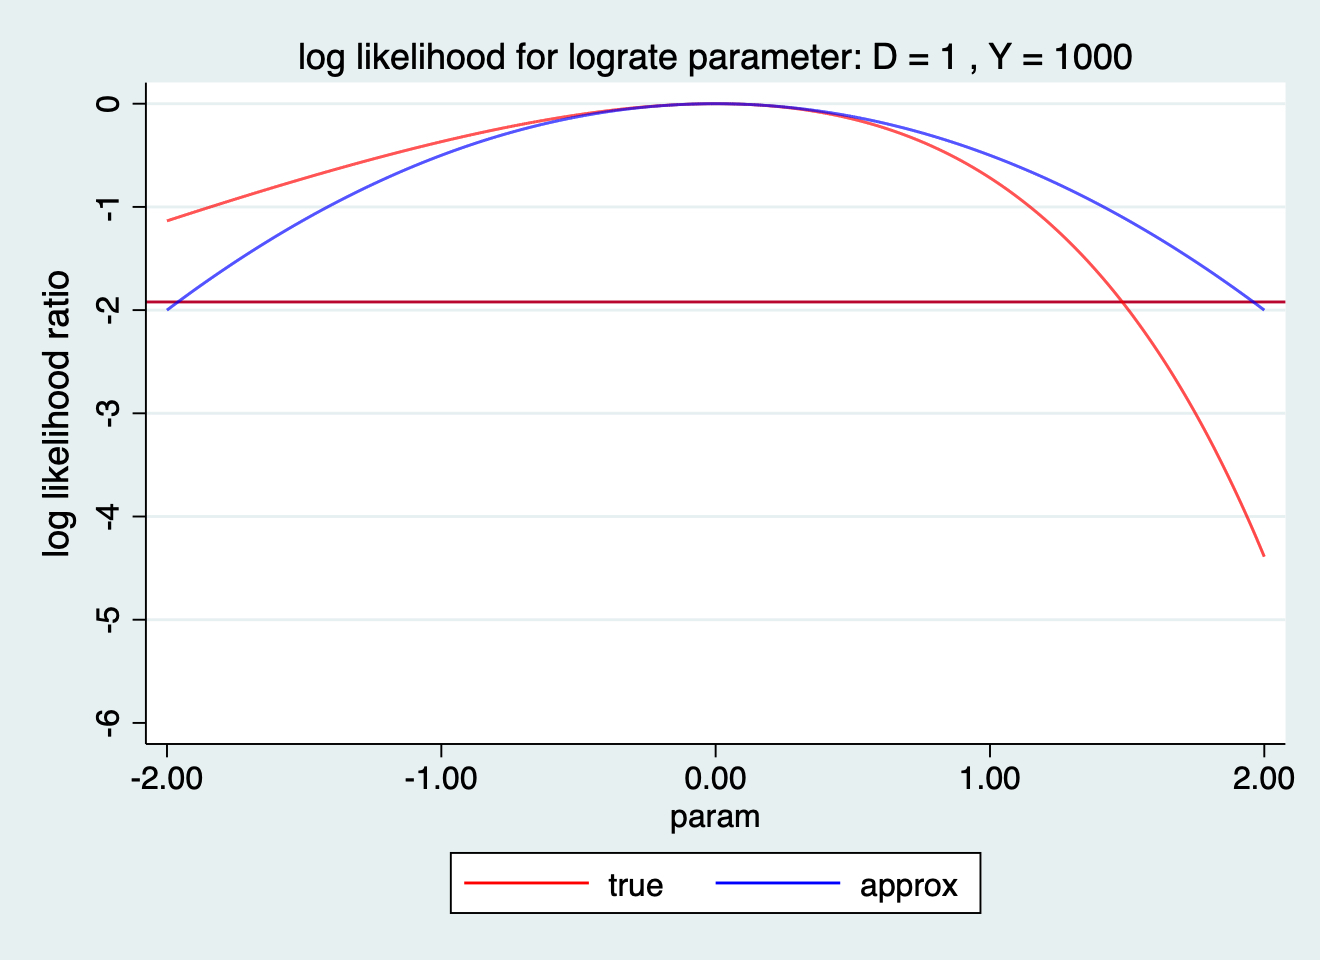 log likelihood ratio for lograte paramter: D=1 Y=1000